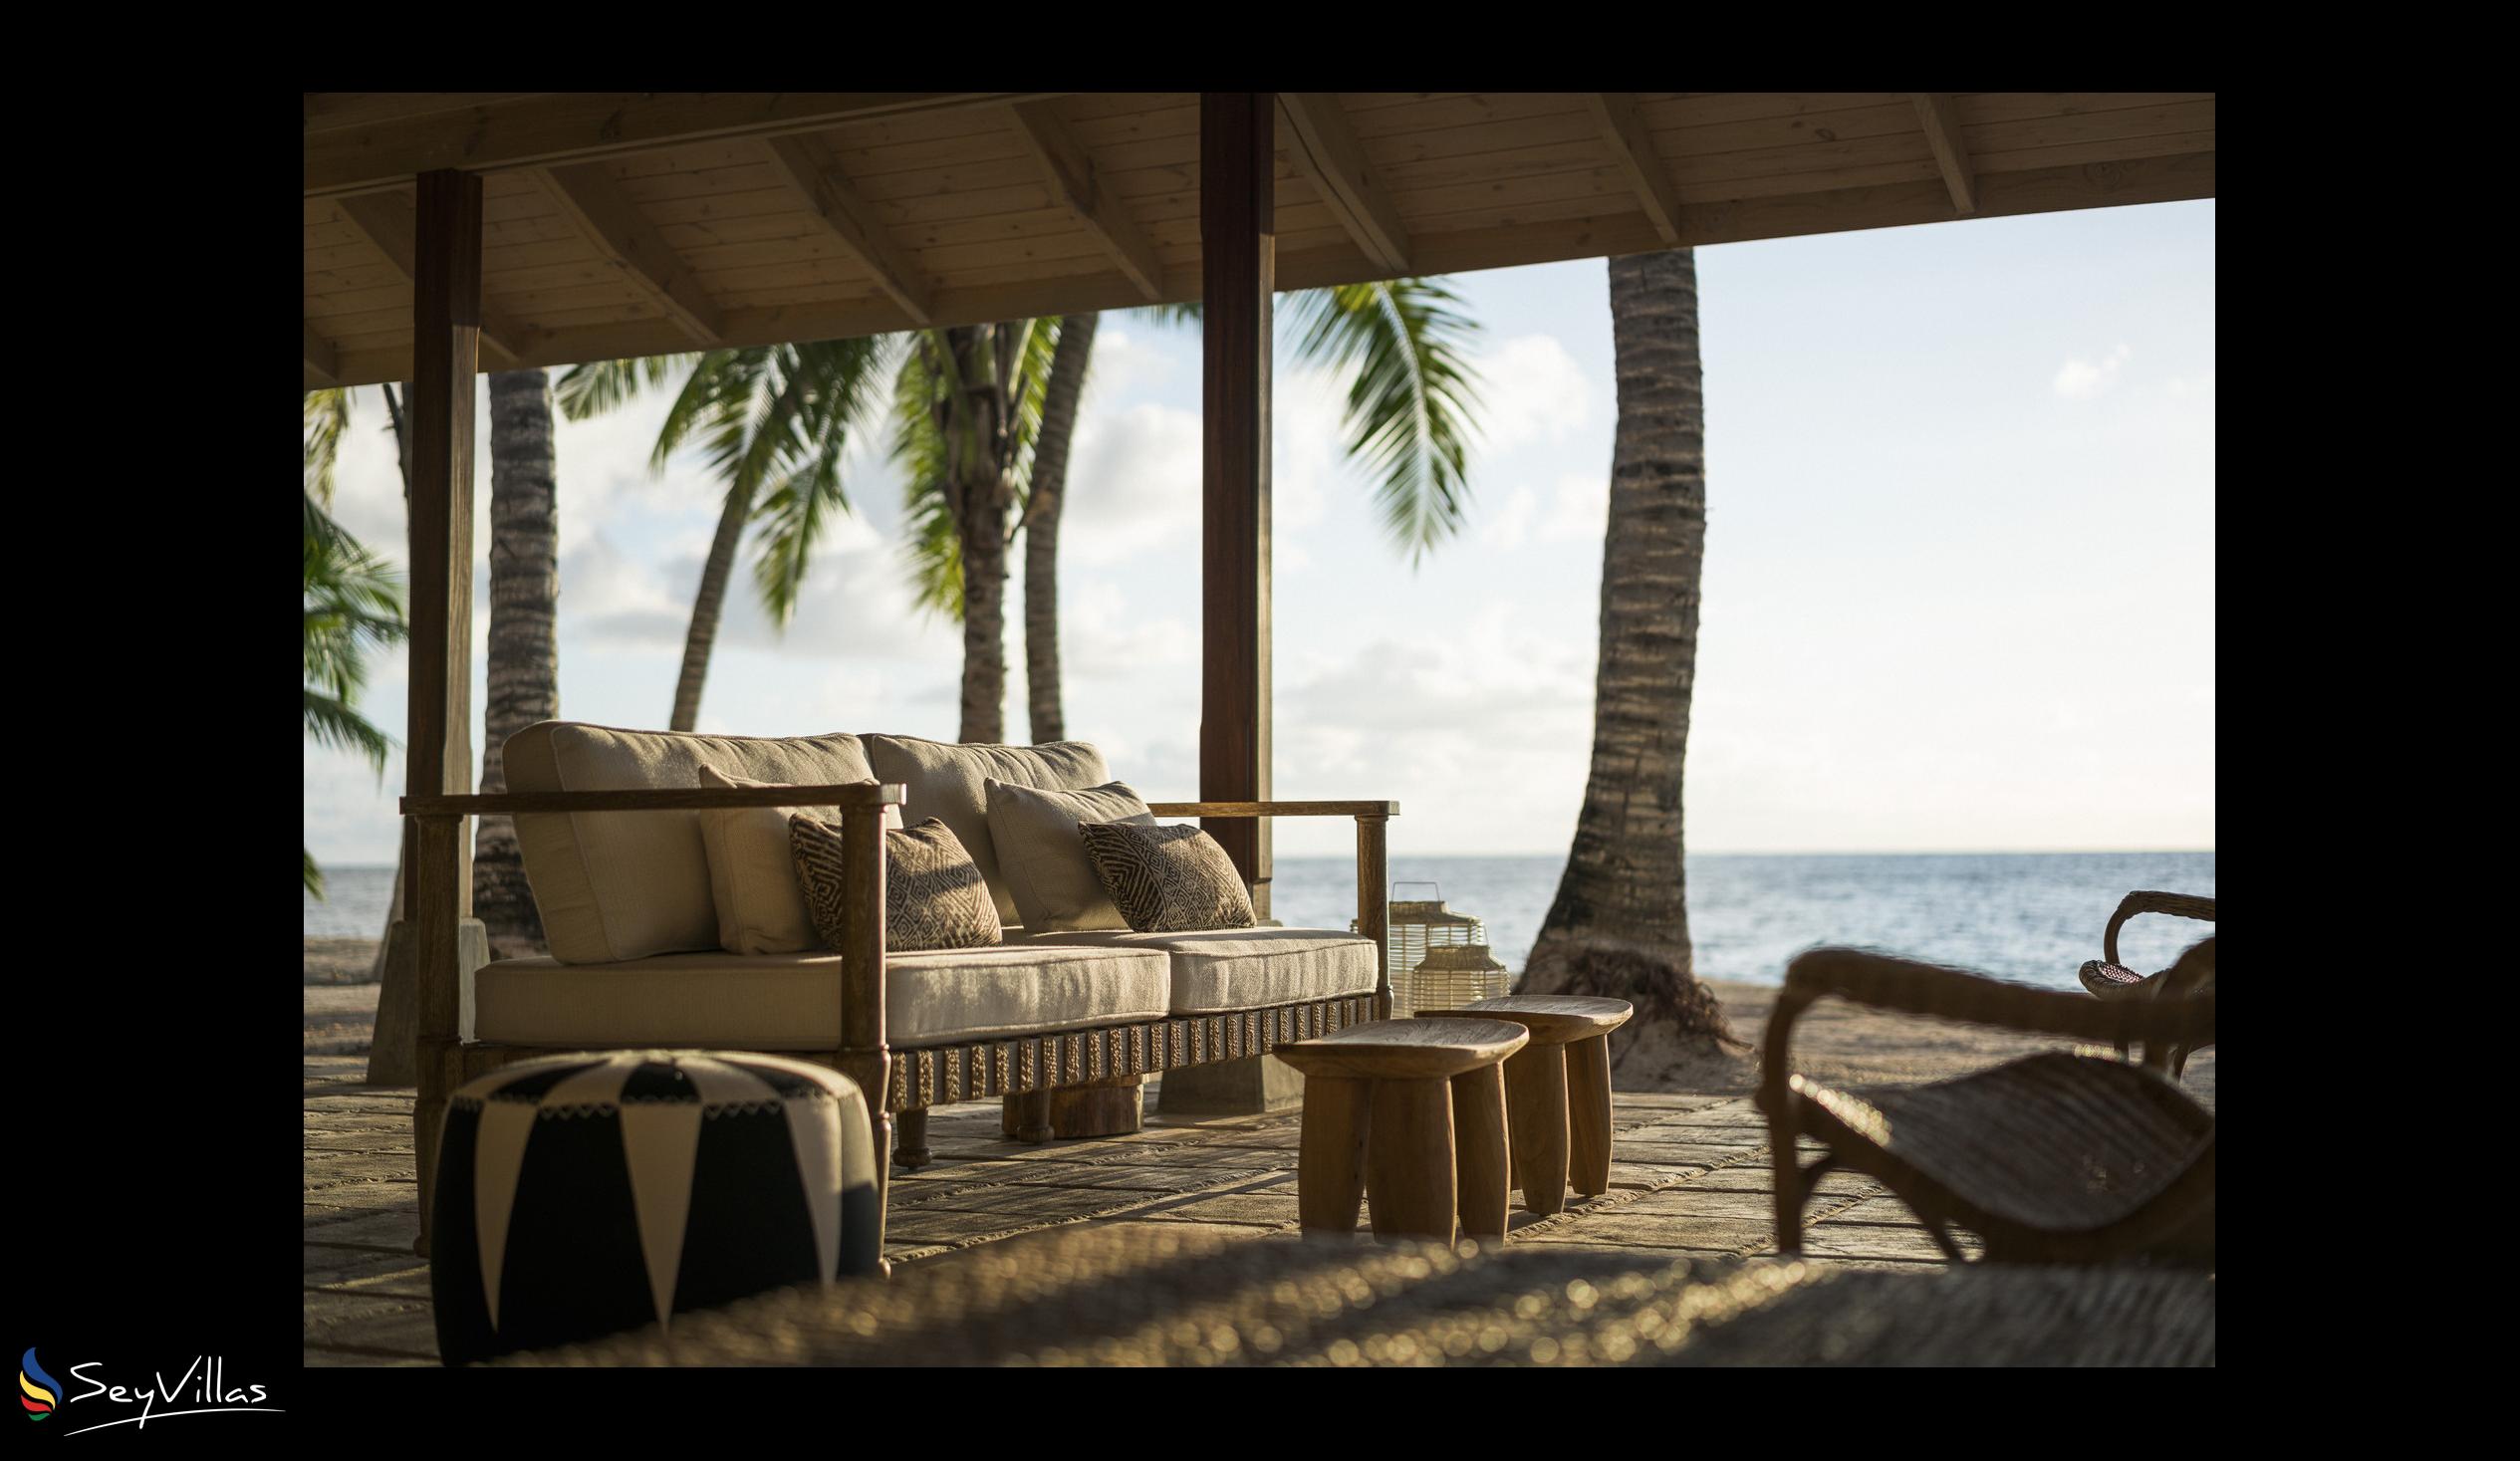 Photo 22: Four Seasons Resort Desroches Island - Indoor area - Desroches Island (Seychelles)